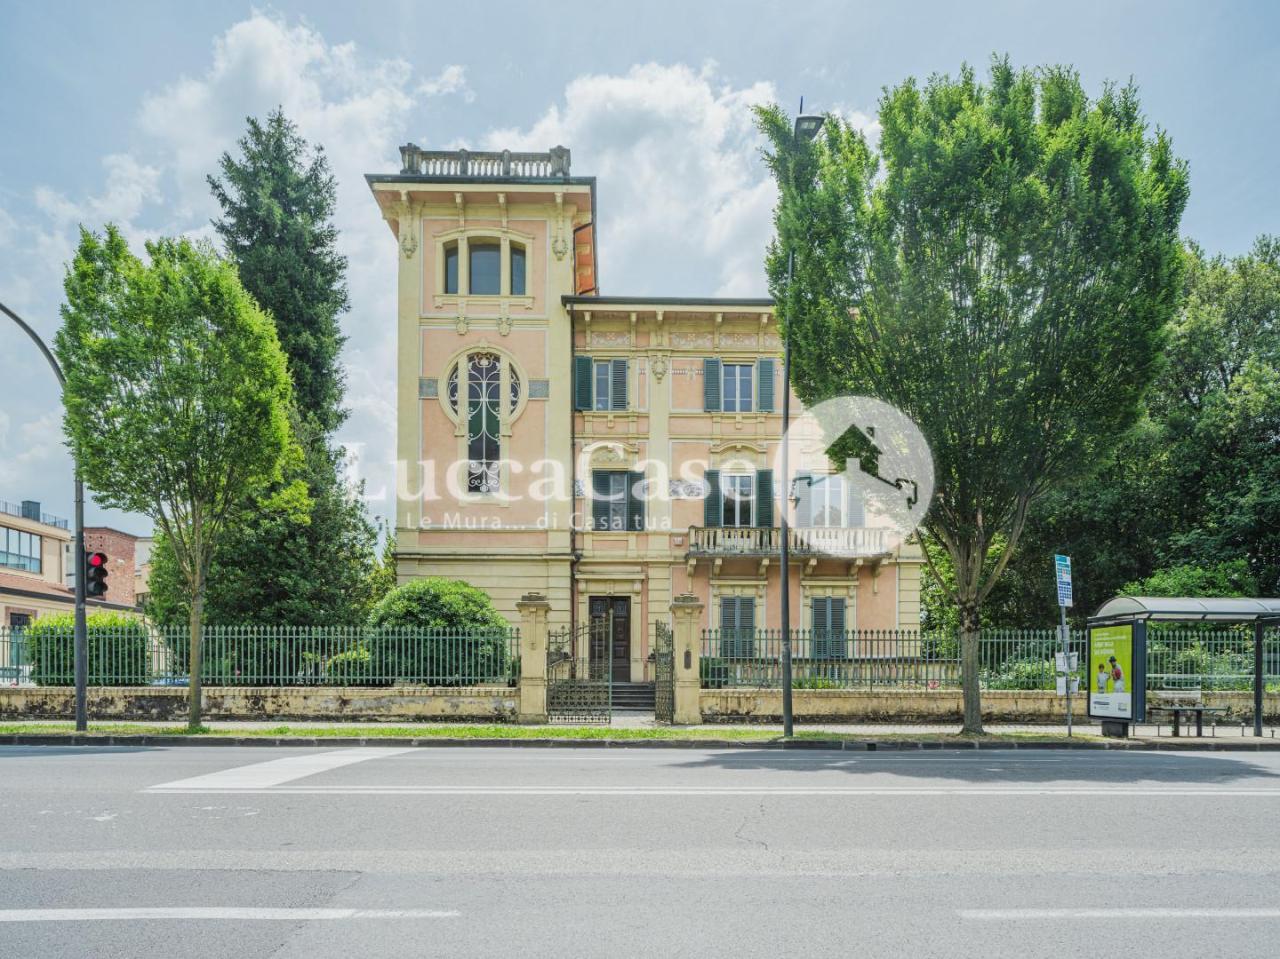 Venda Villa, Lucca foto